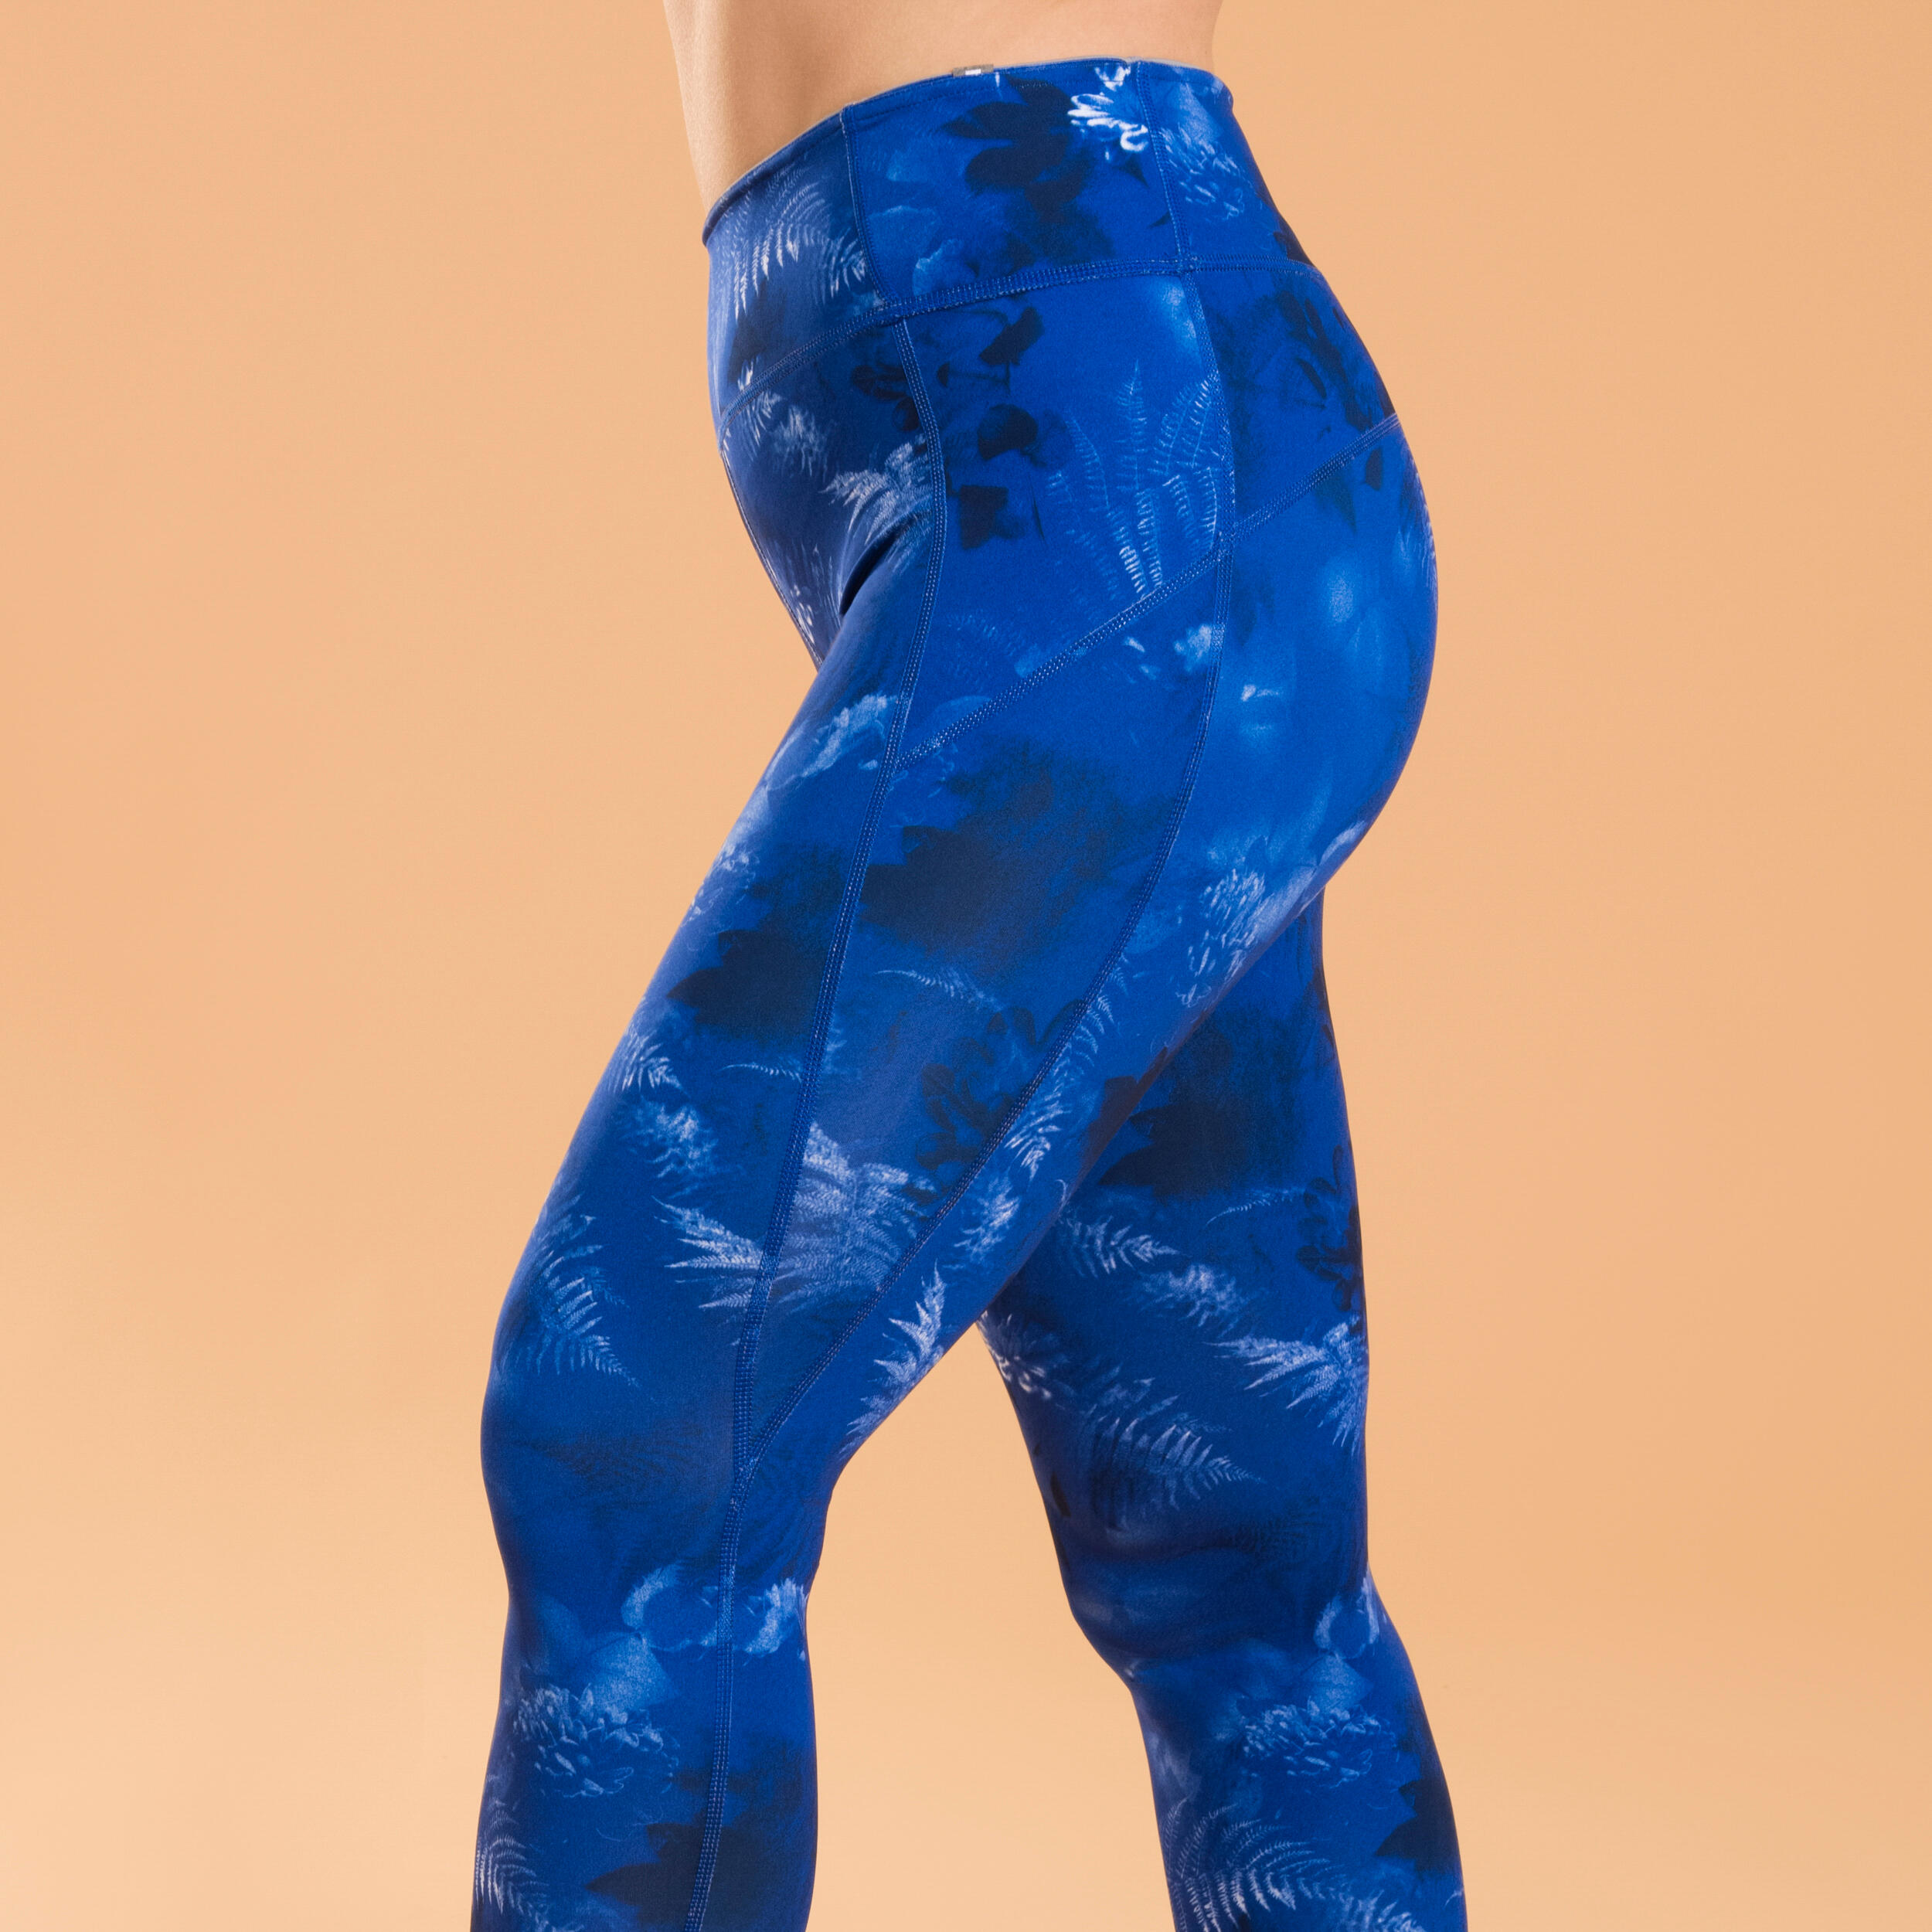 https://contents.mediadecathlon.com/p2384522/k$099313975c6b63f19a8b1ca079d2589c/women-s-reversible-dynamic-yoga-leggings-plain-blue-print-kimjaly-8786568.jpg